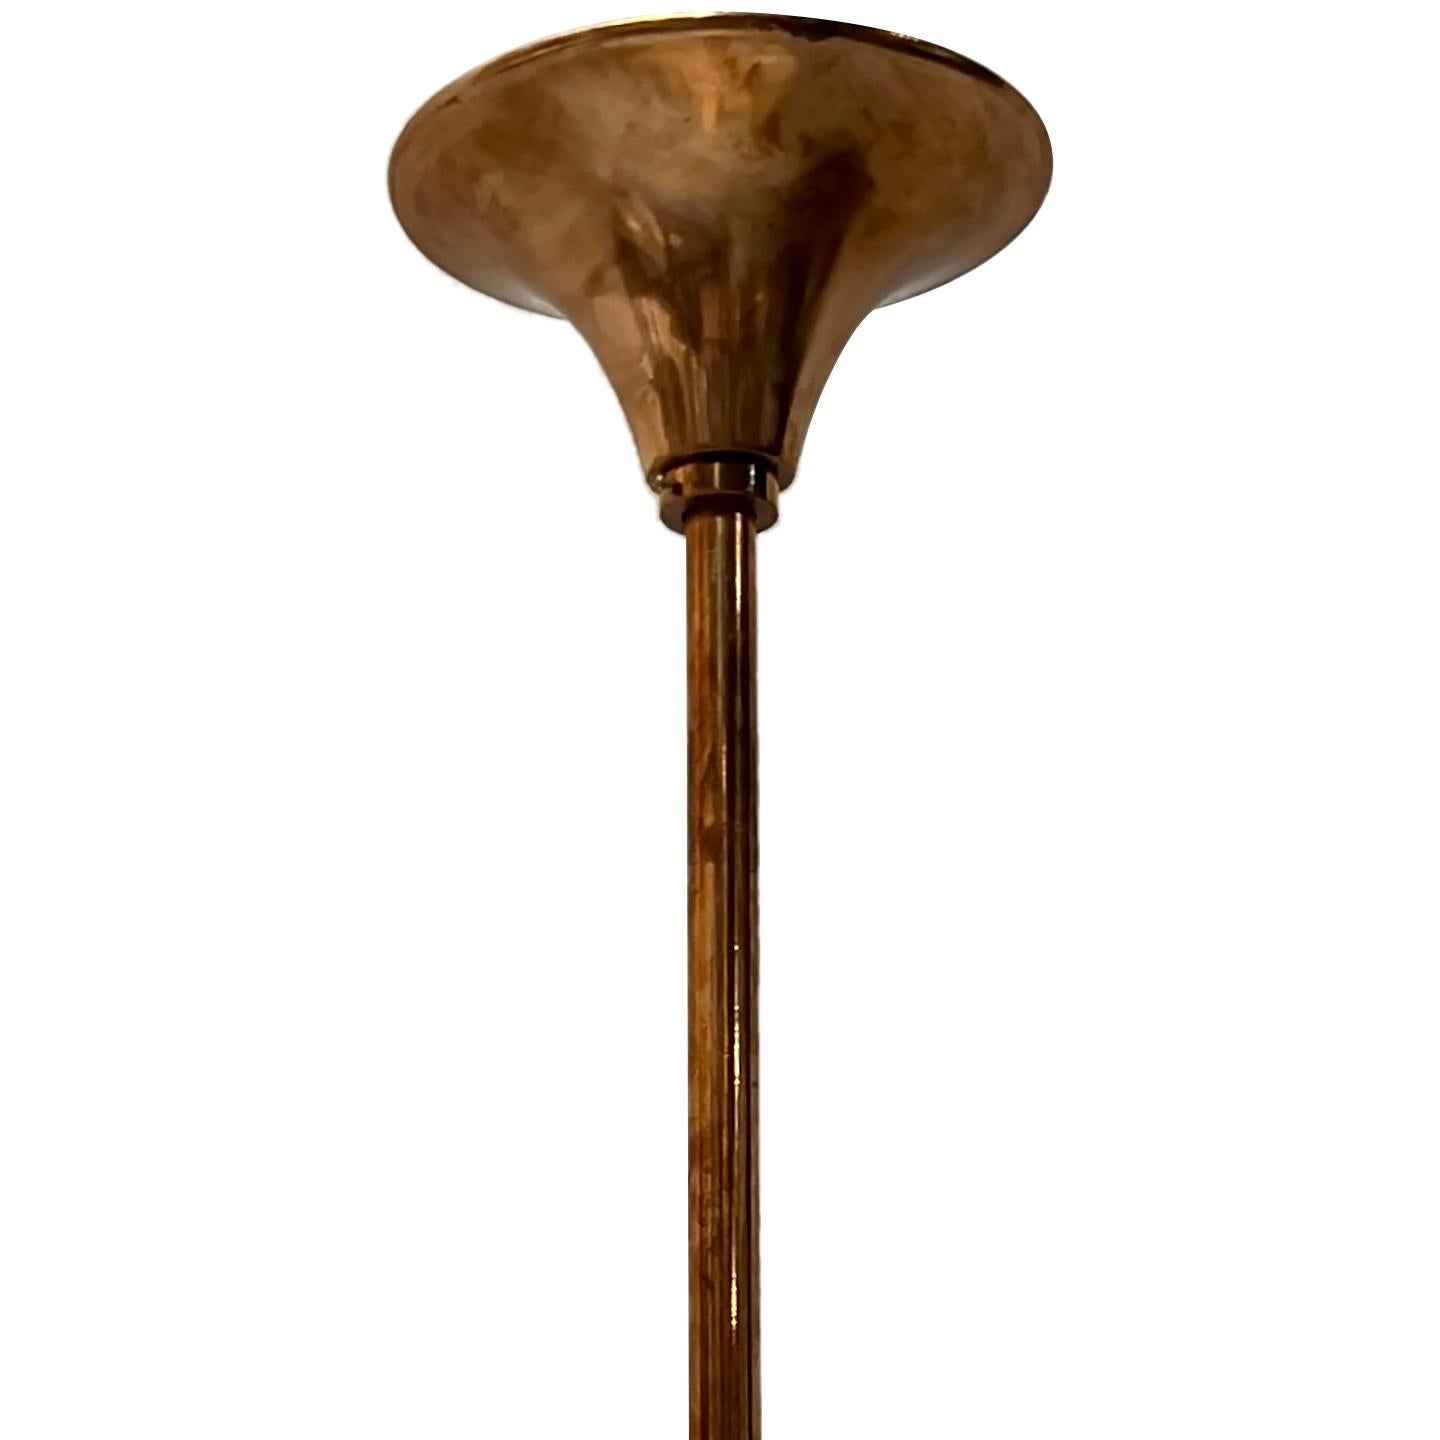 Circa 1930's French copper and glass light fixture.

Measurements:
Minimum drop: 21